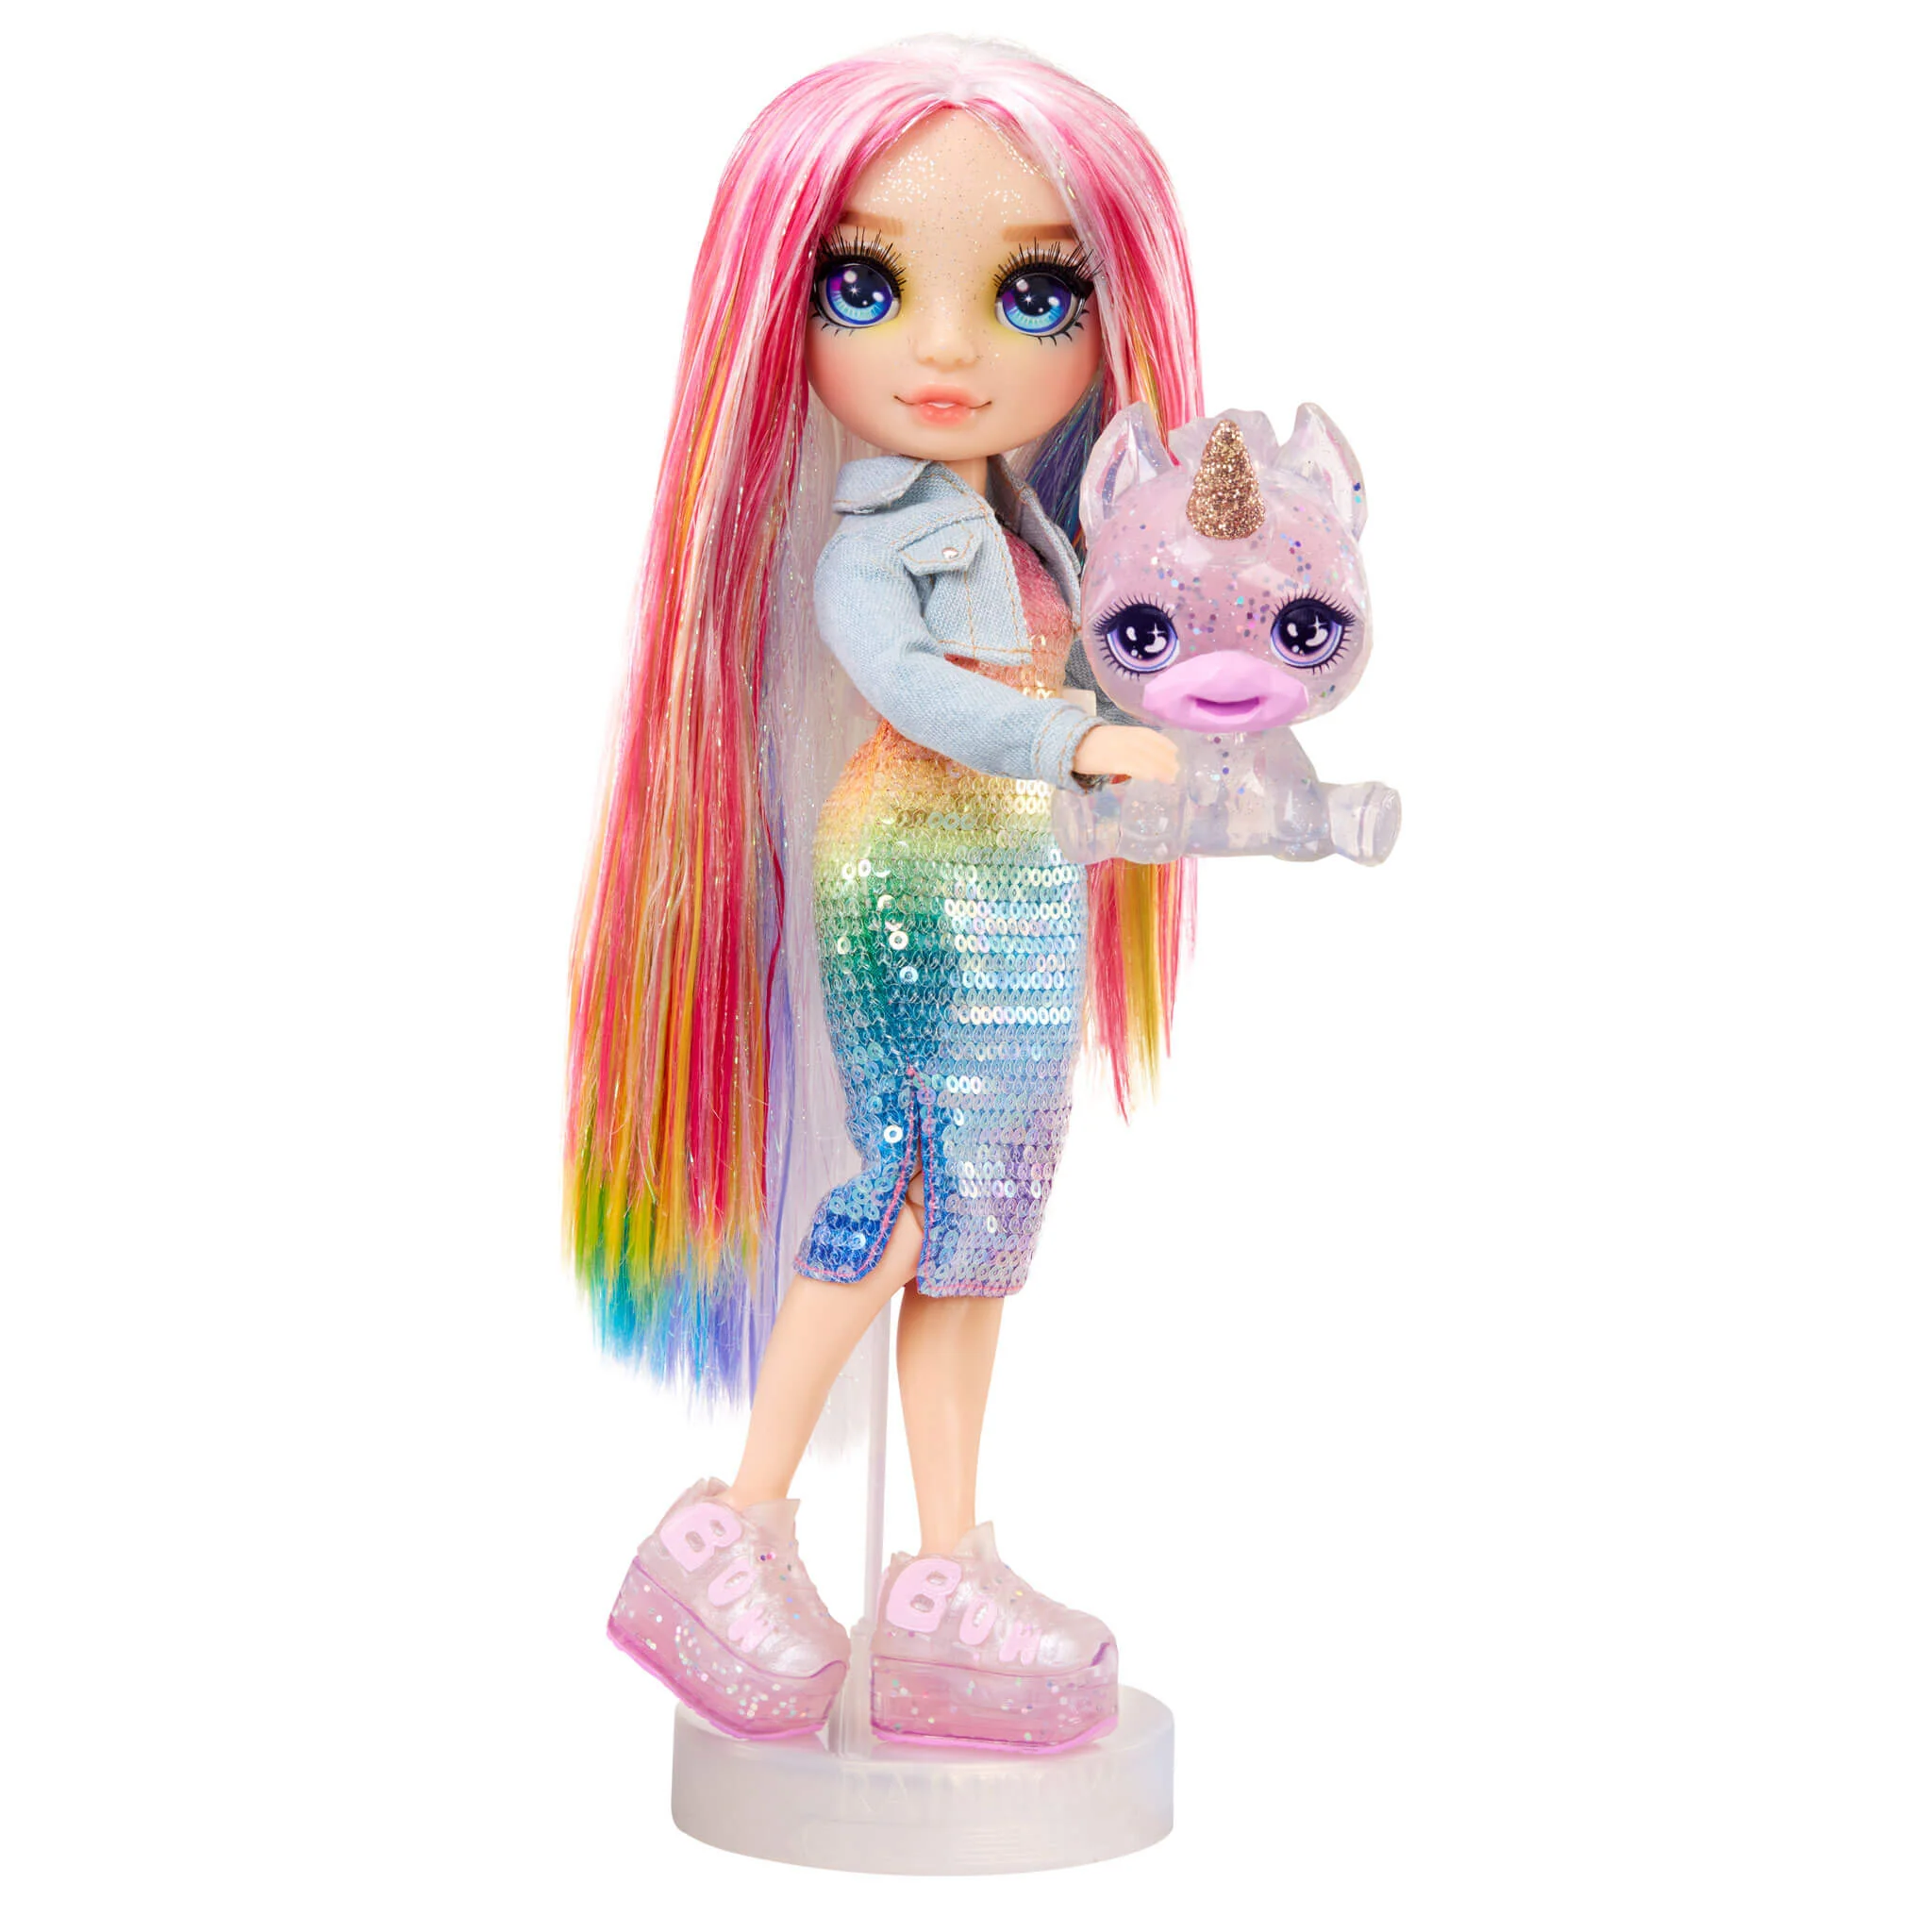 Where To Buy Rainbow High Dolls